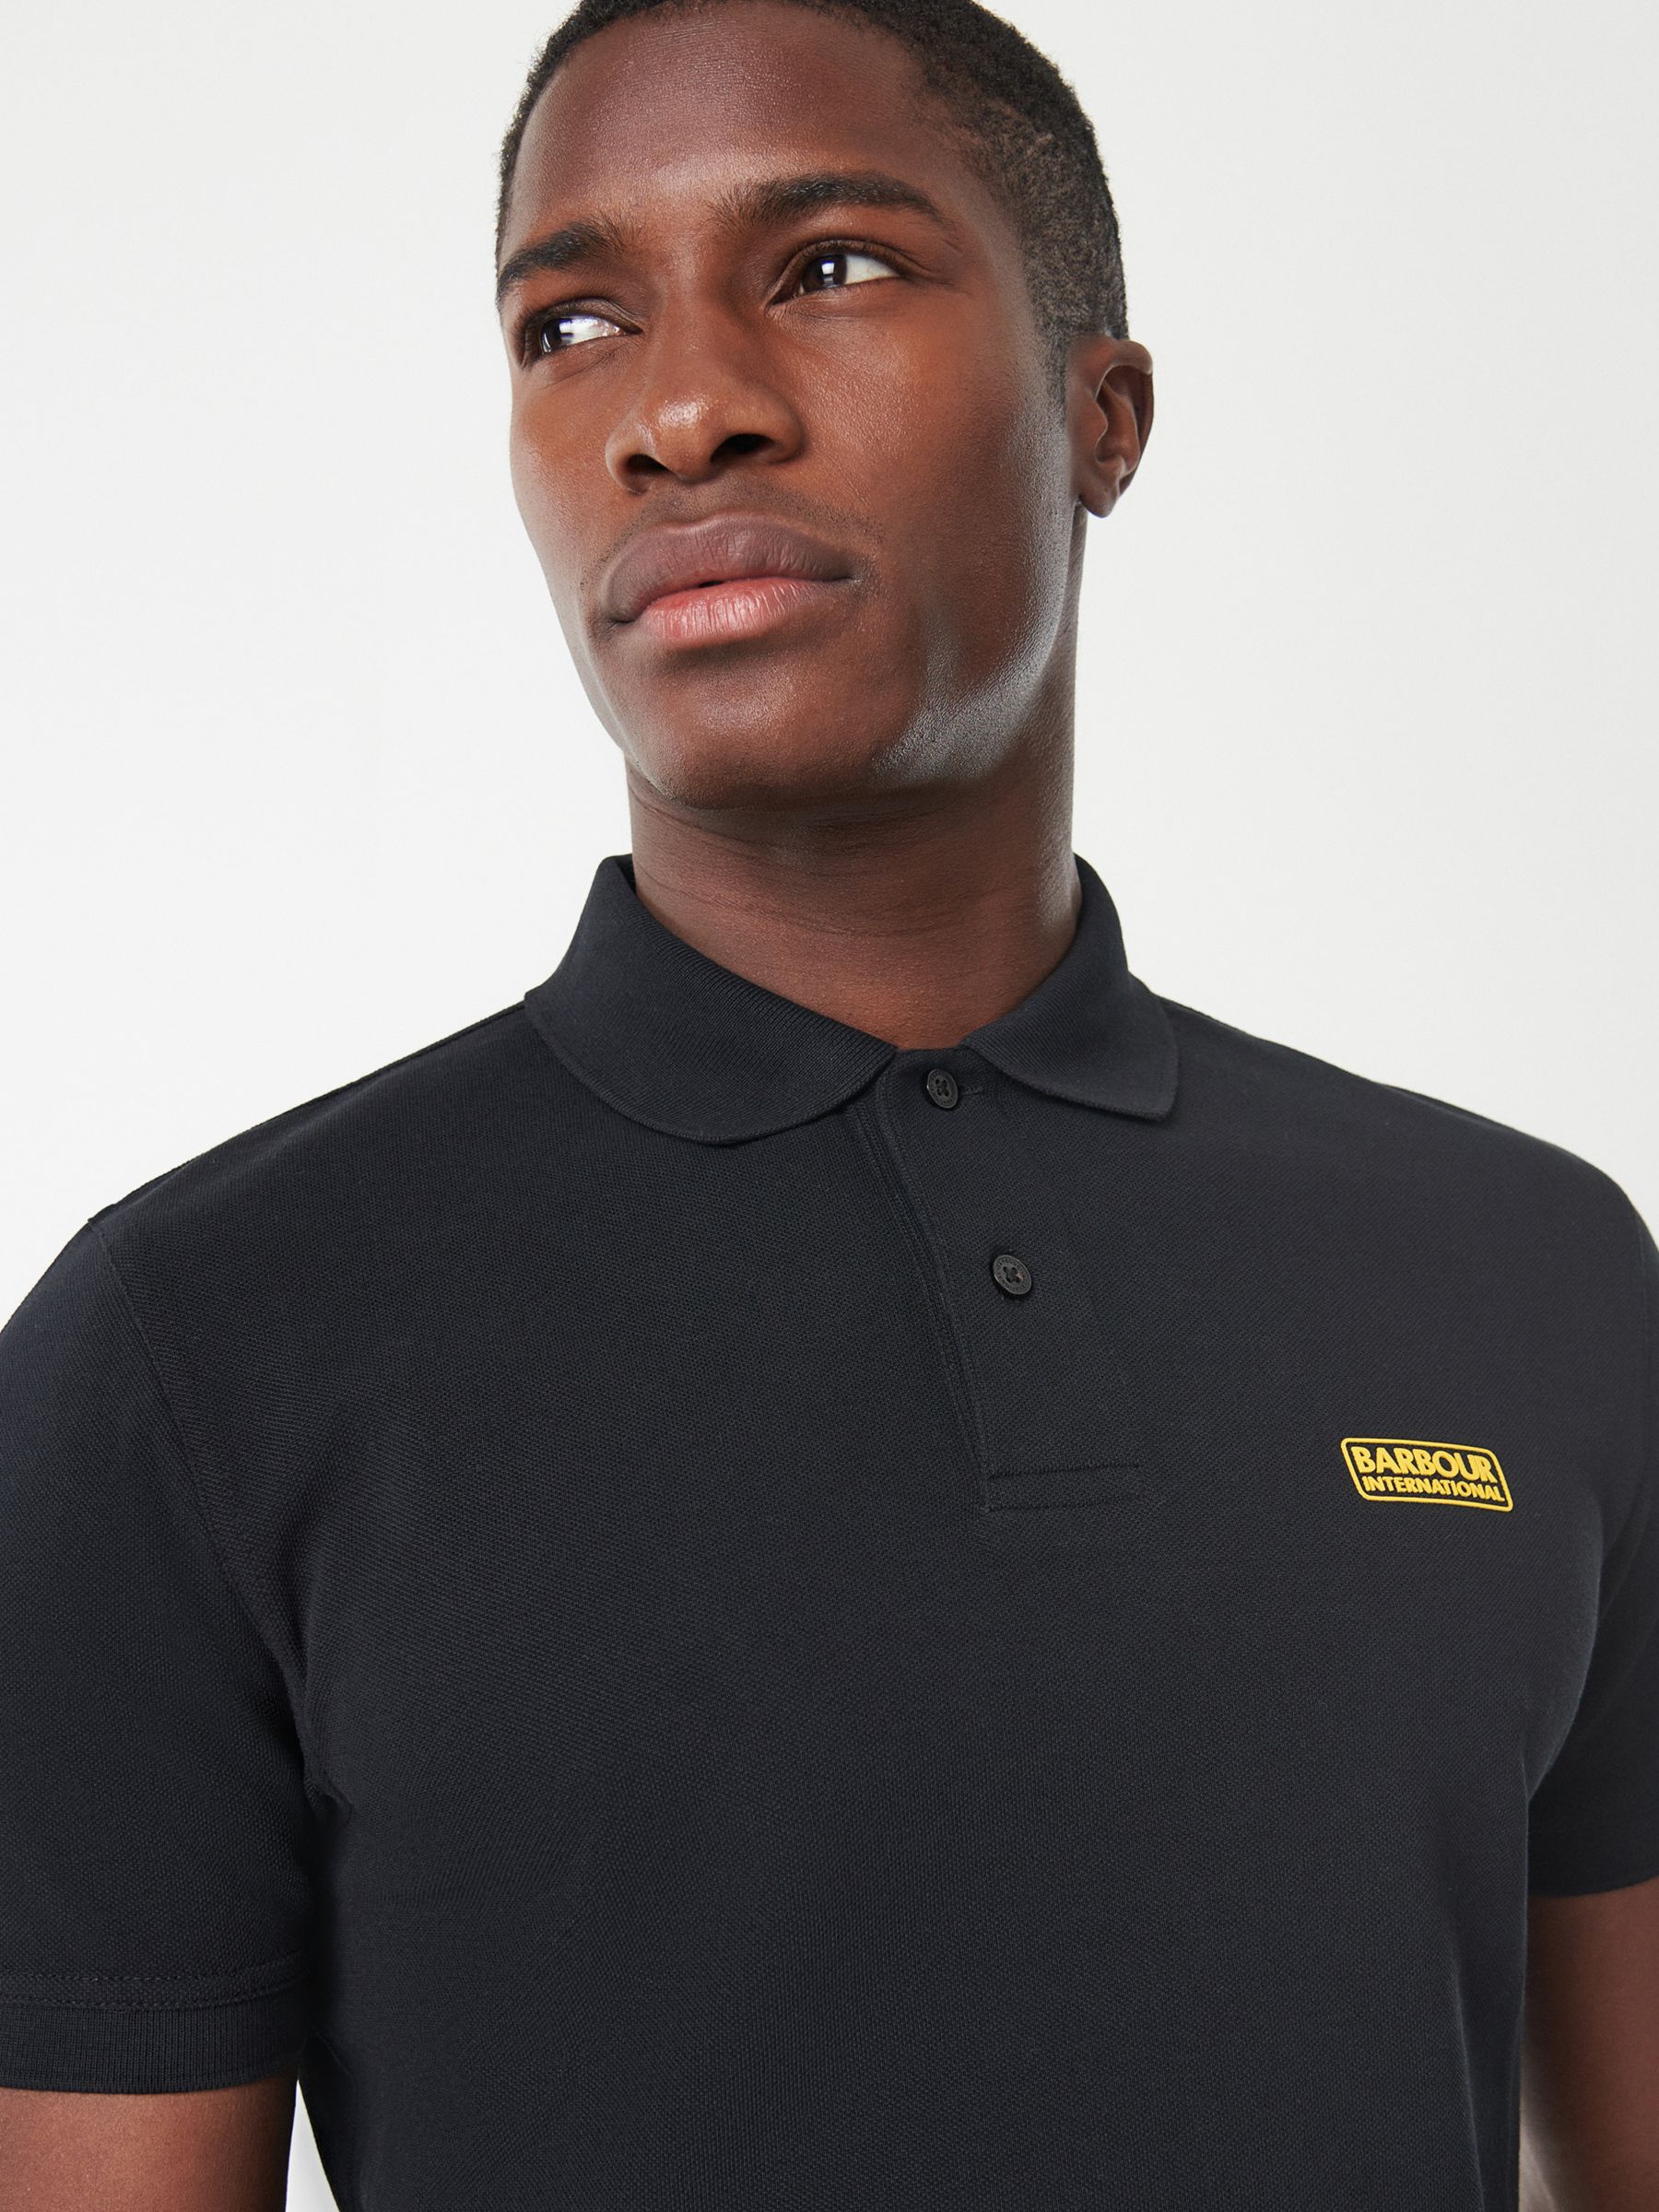 Barbour International Essential Polo Shirt, Black, XL